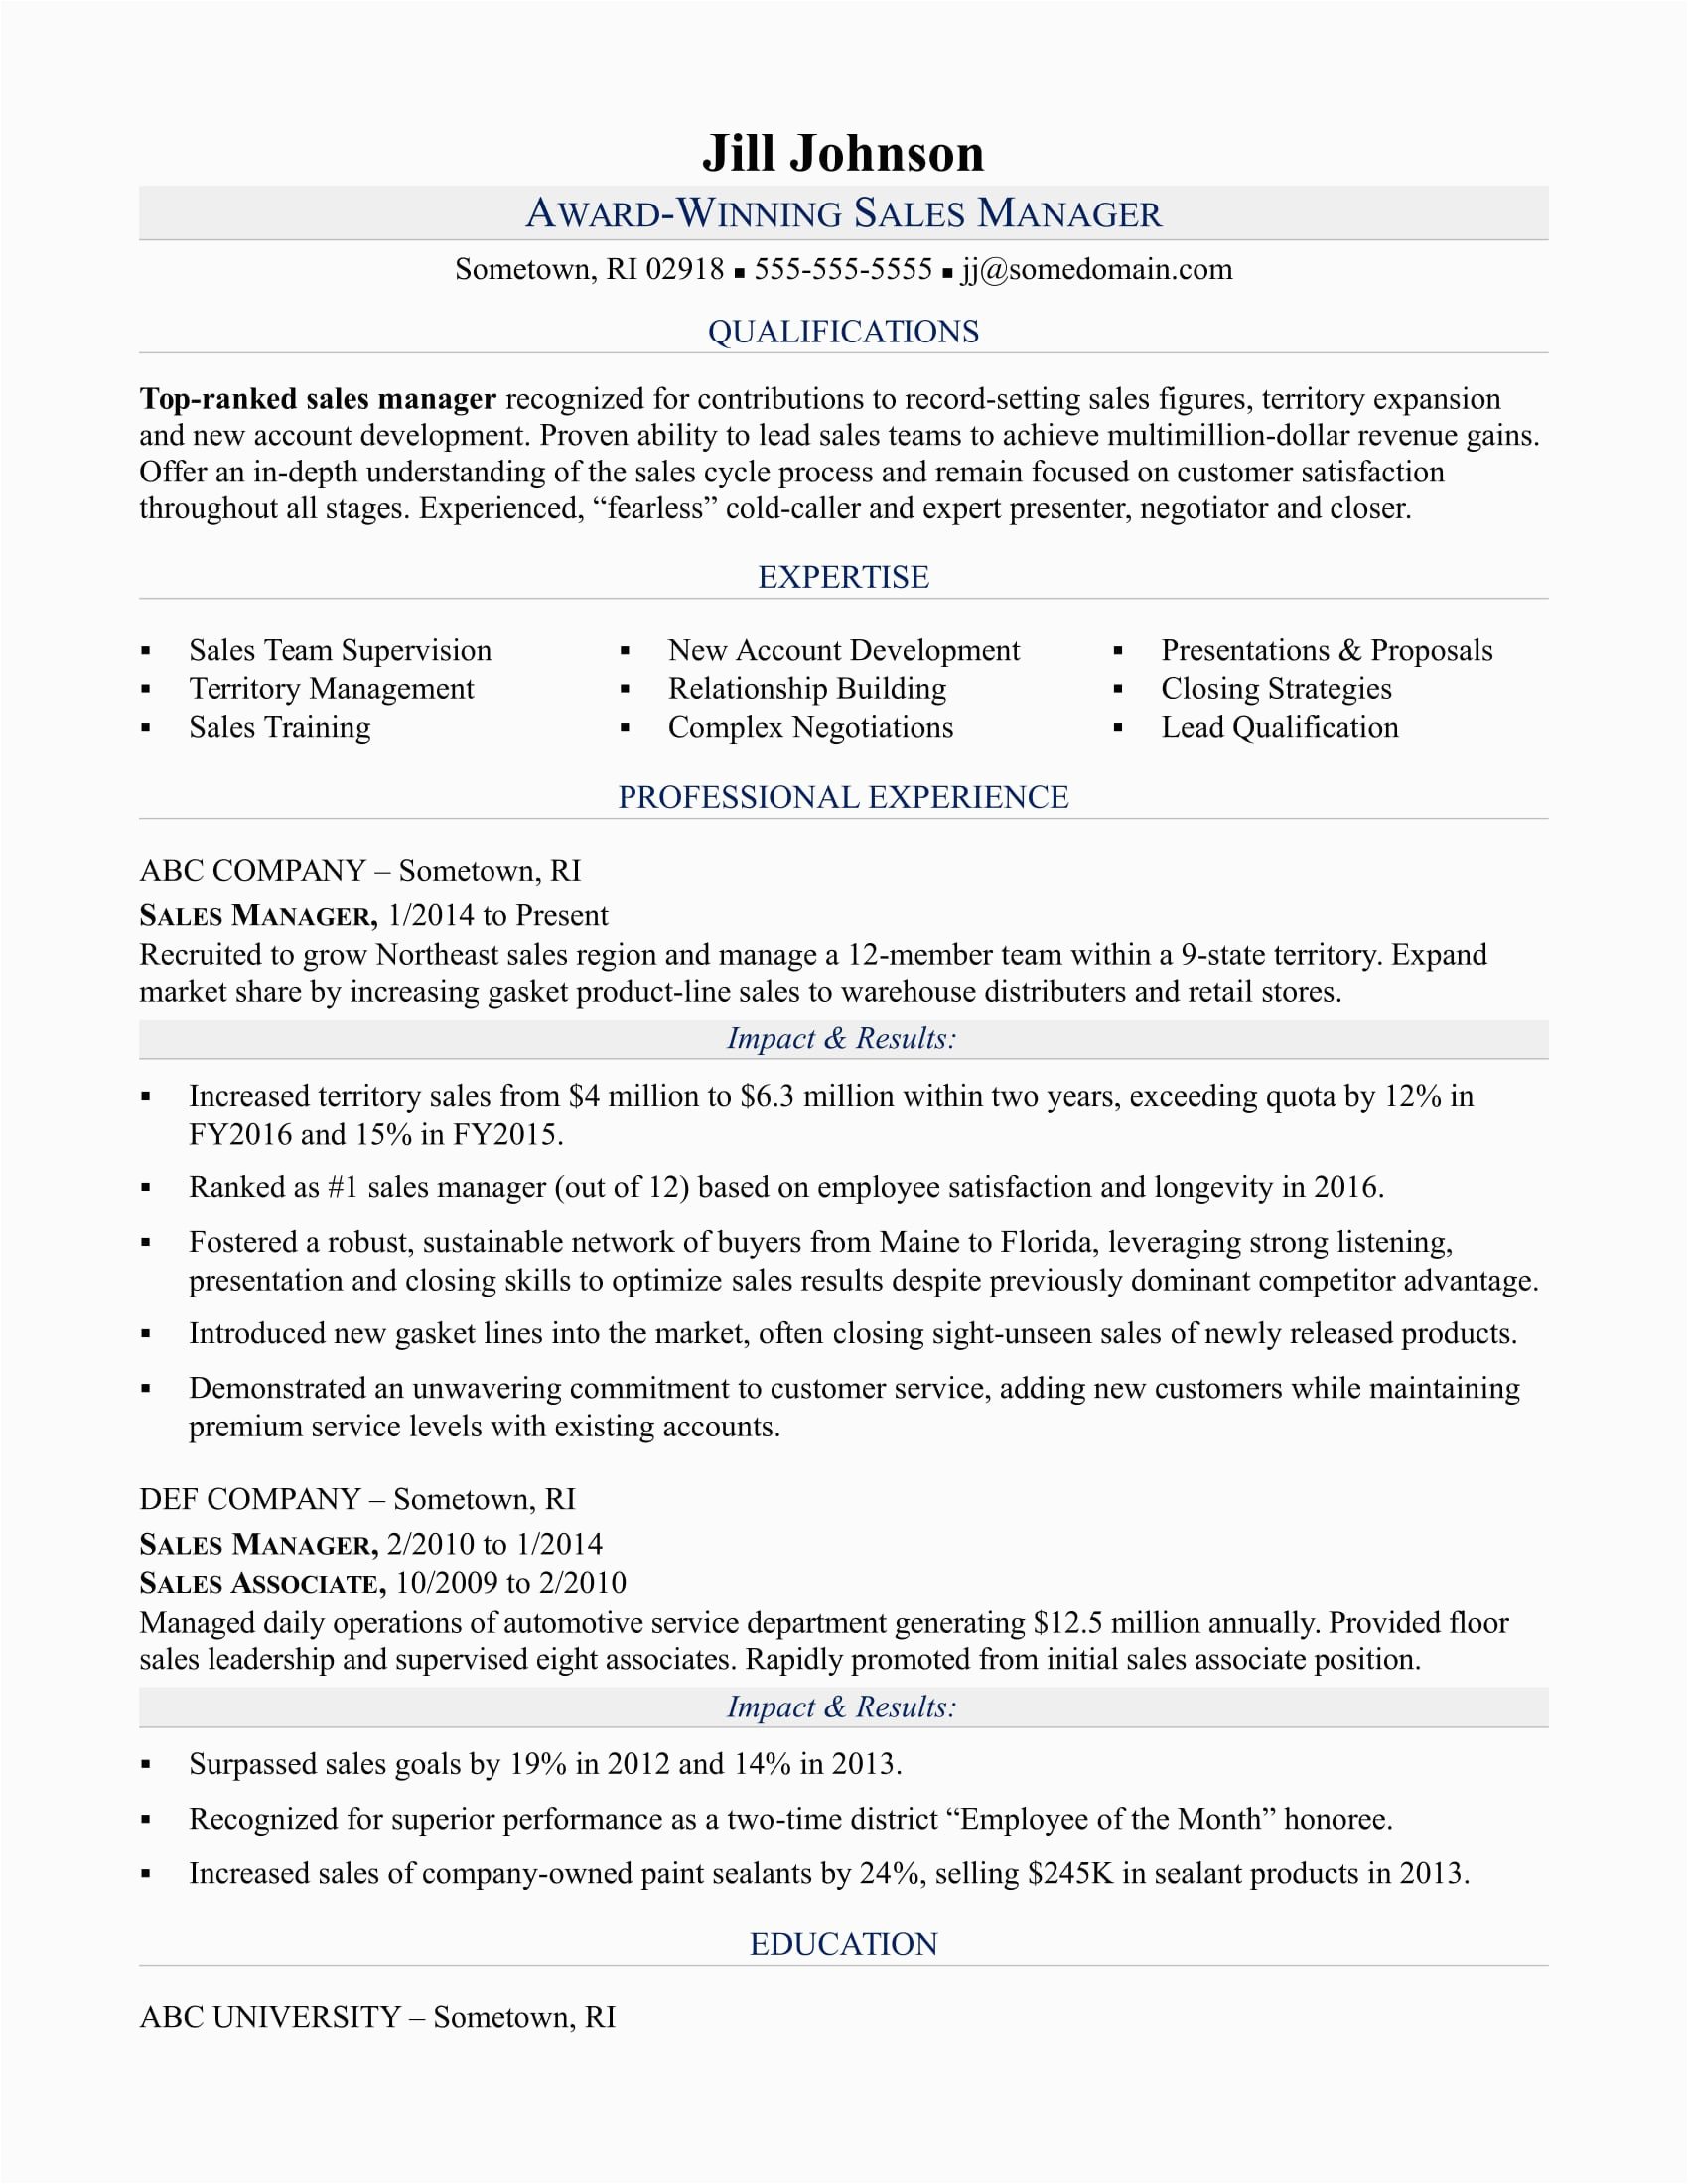 Sample Resume for top Management Position Sales Manager Resume Sample